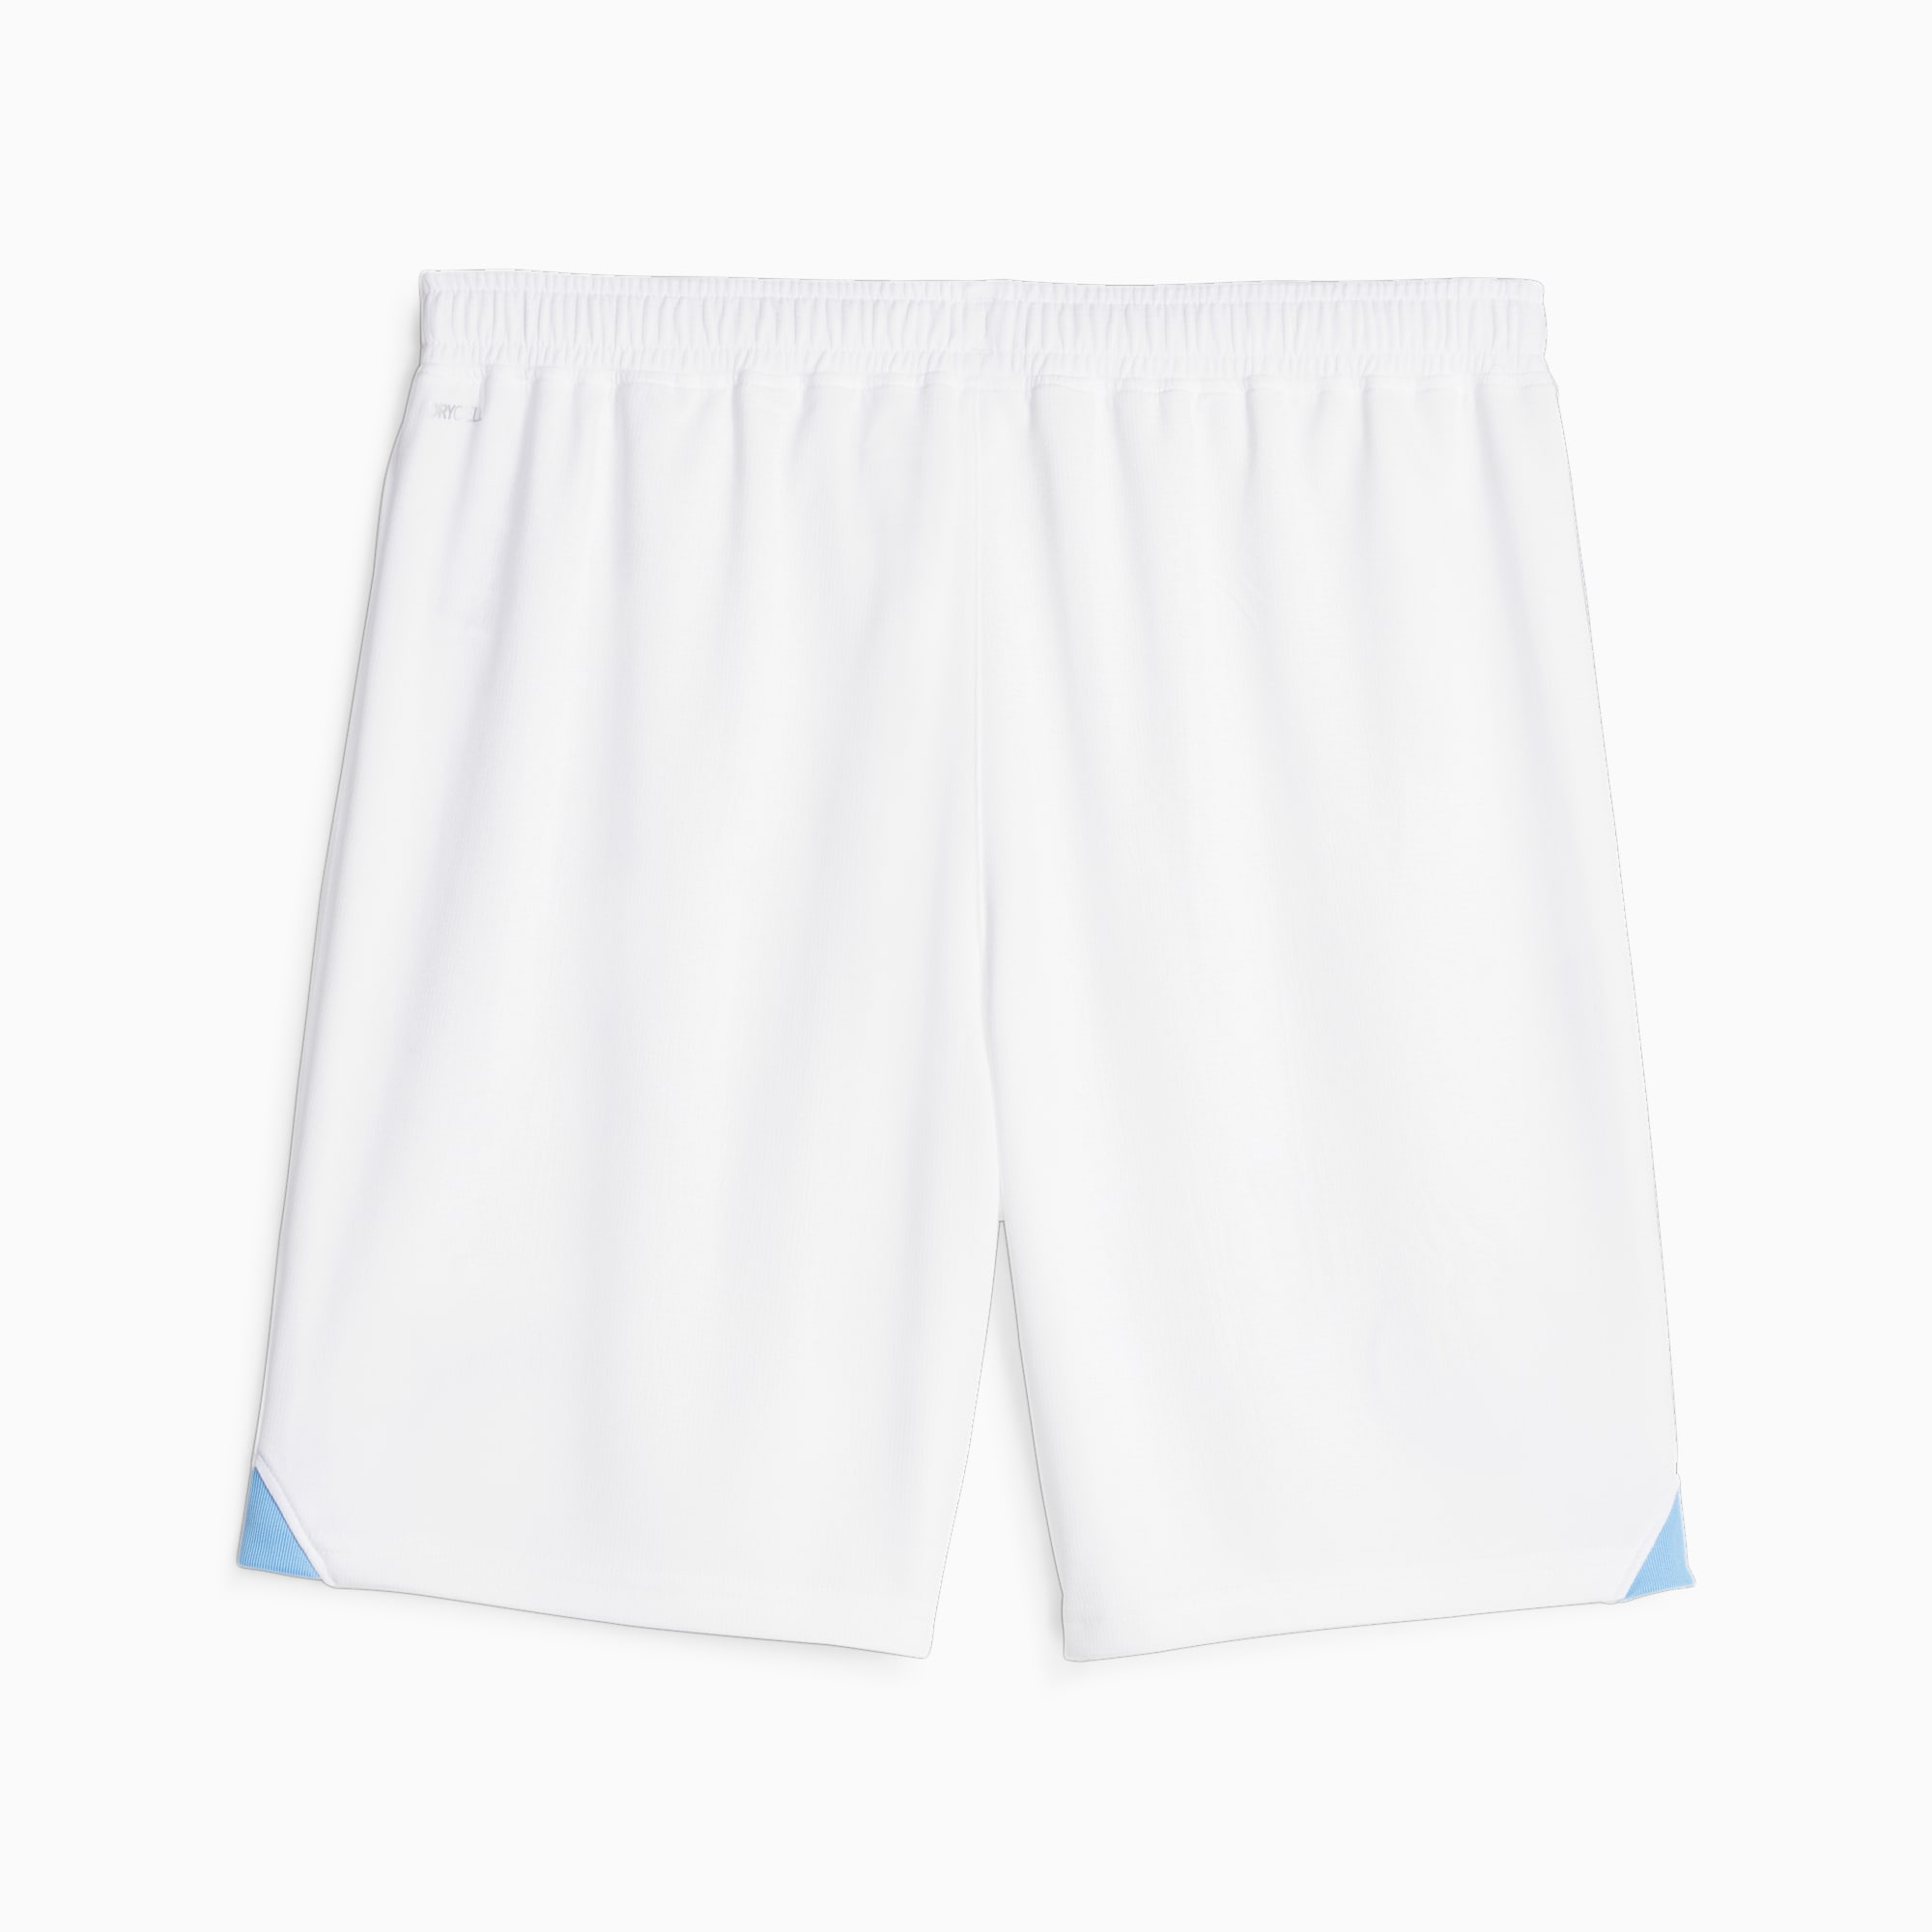 Men's PUMA Girona FC Football Shorts, Dark Blue, Size M, Clothing